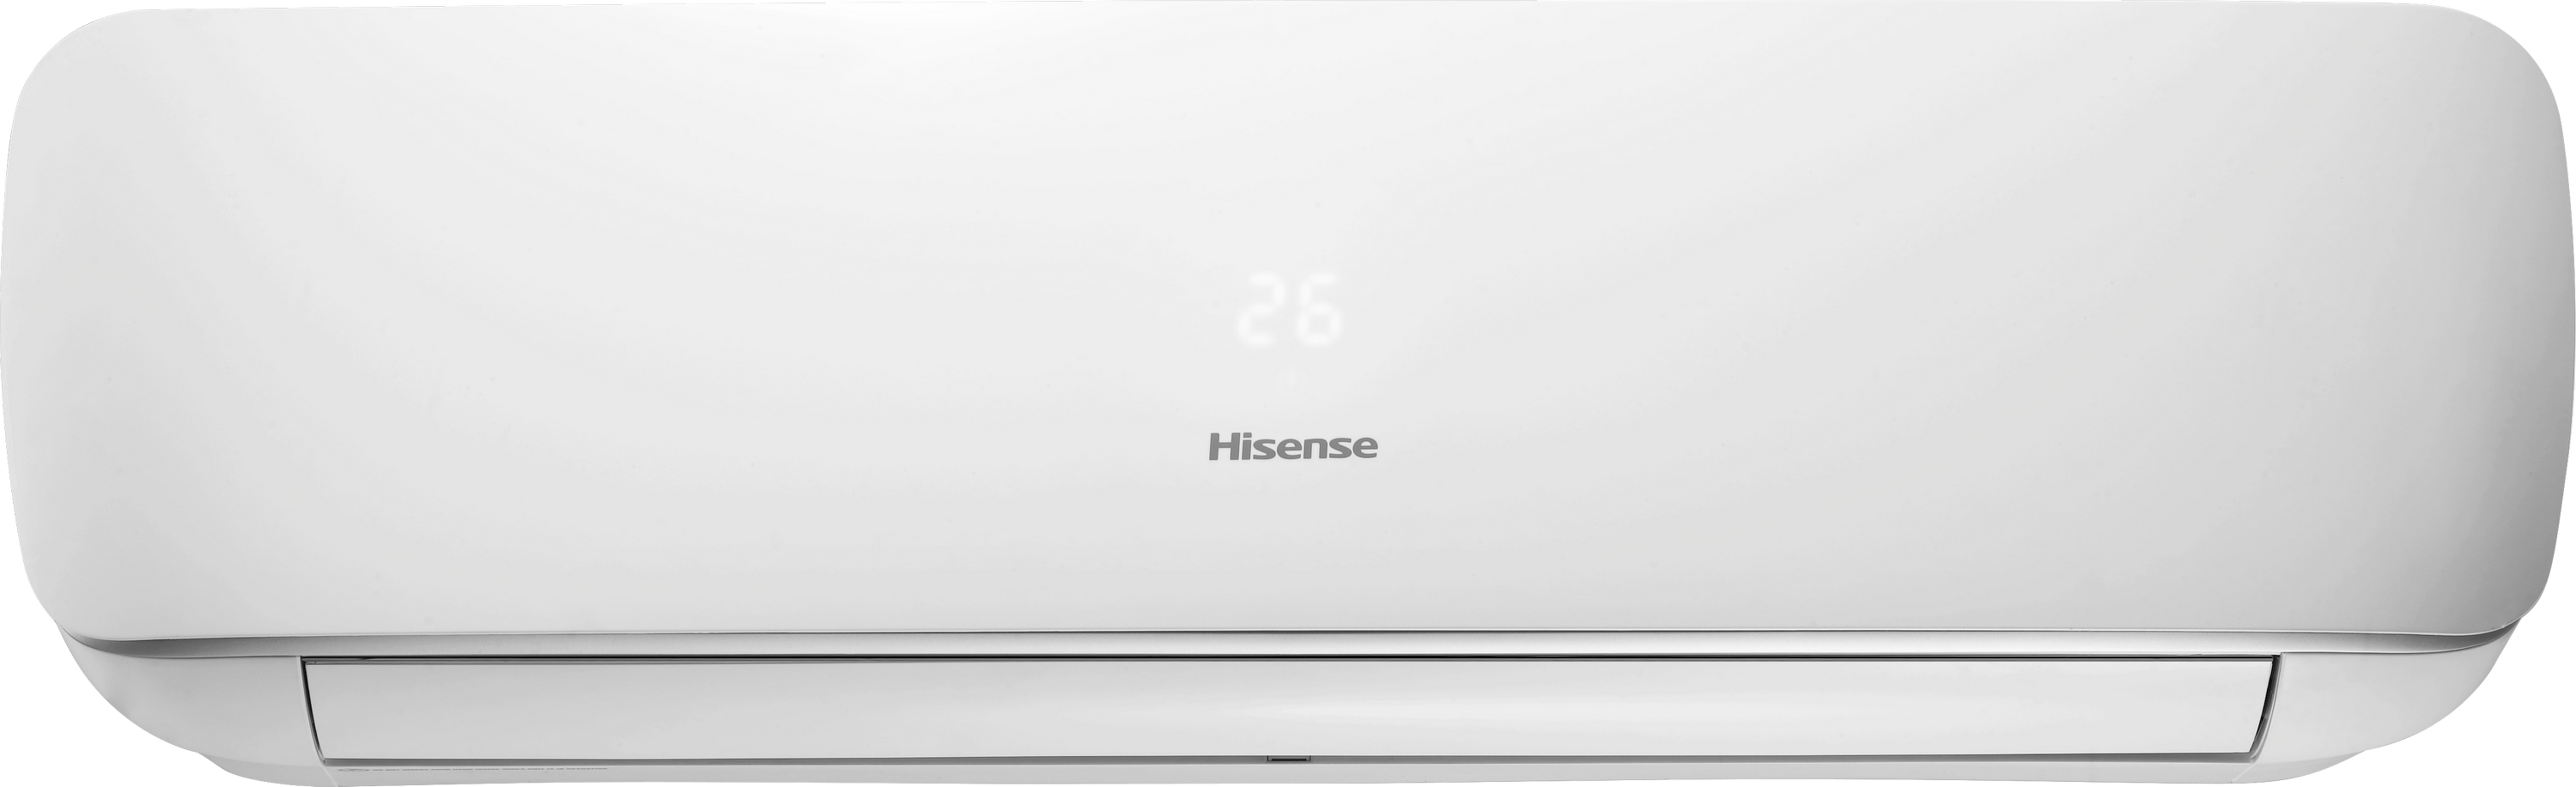 Кондиционер сплит-система Hisense Apple Pie R32 TG25VE0A цена 0.00 грн - фотография 2